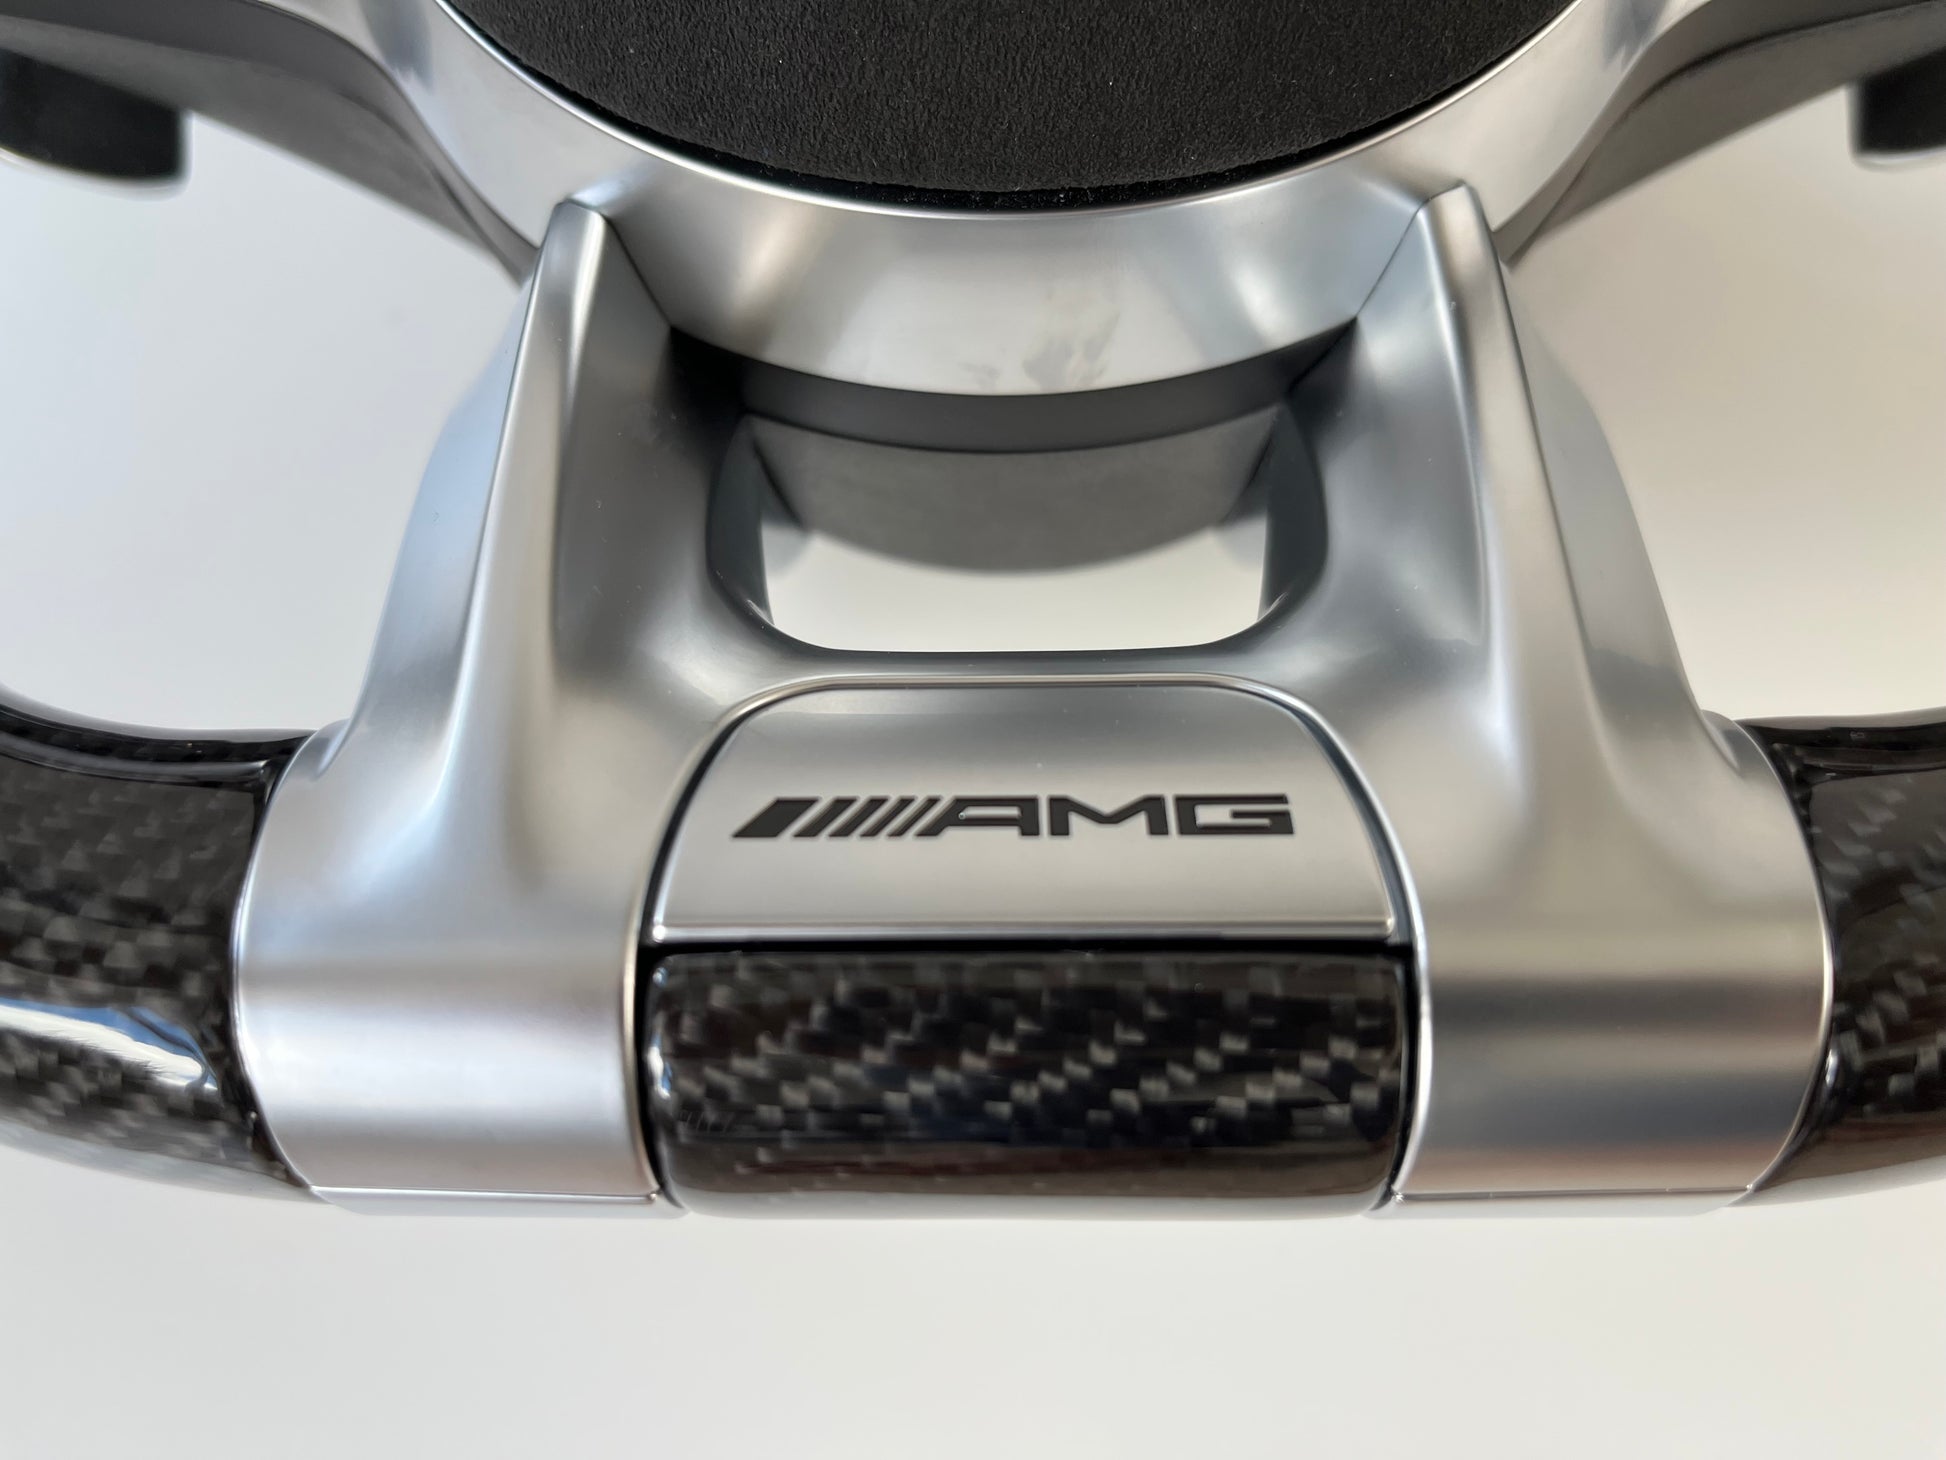 Carbon Fiber Steering wheel for Mercedes – Imma Performance